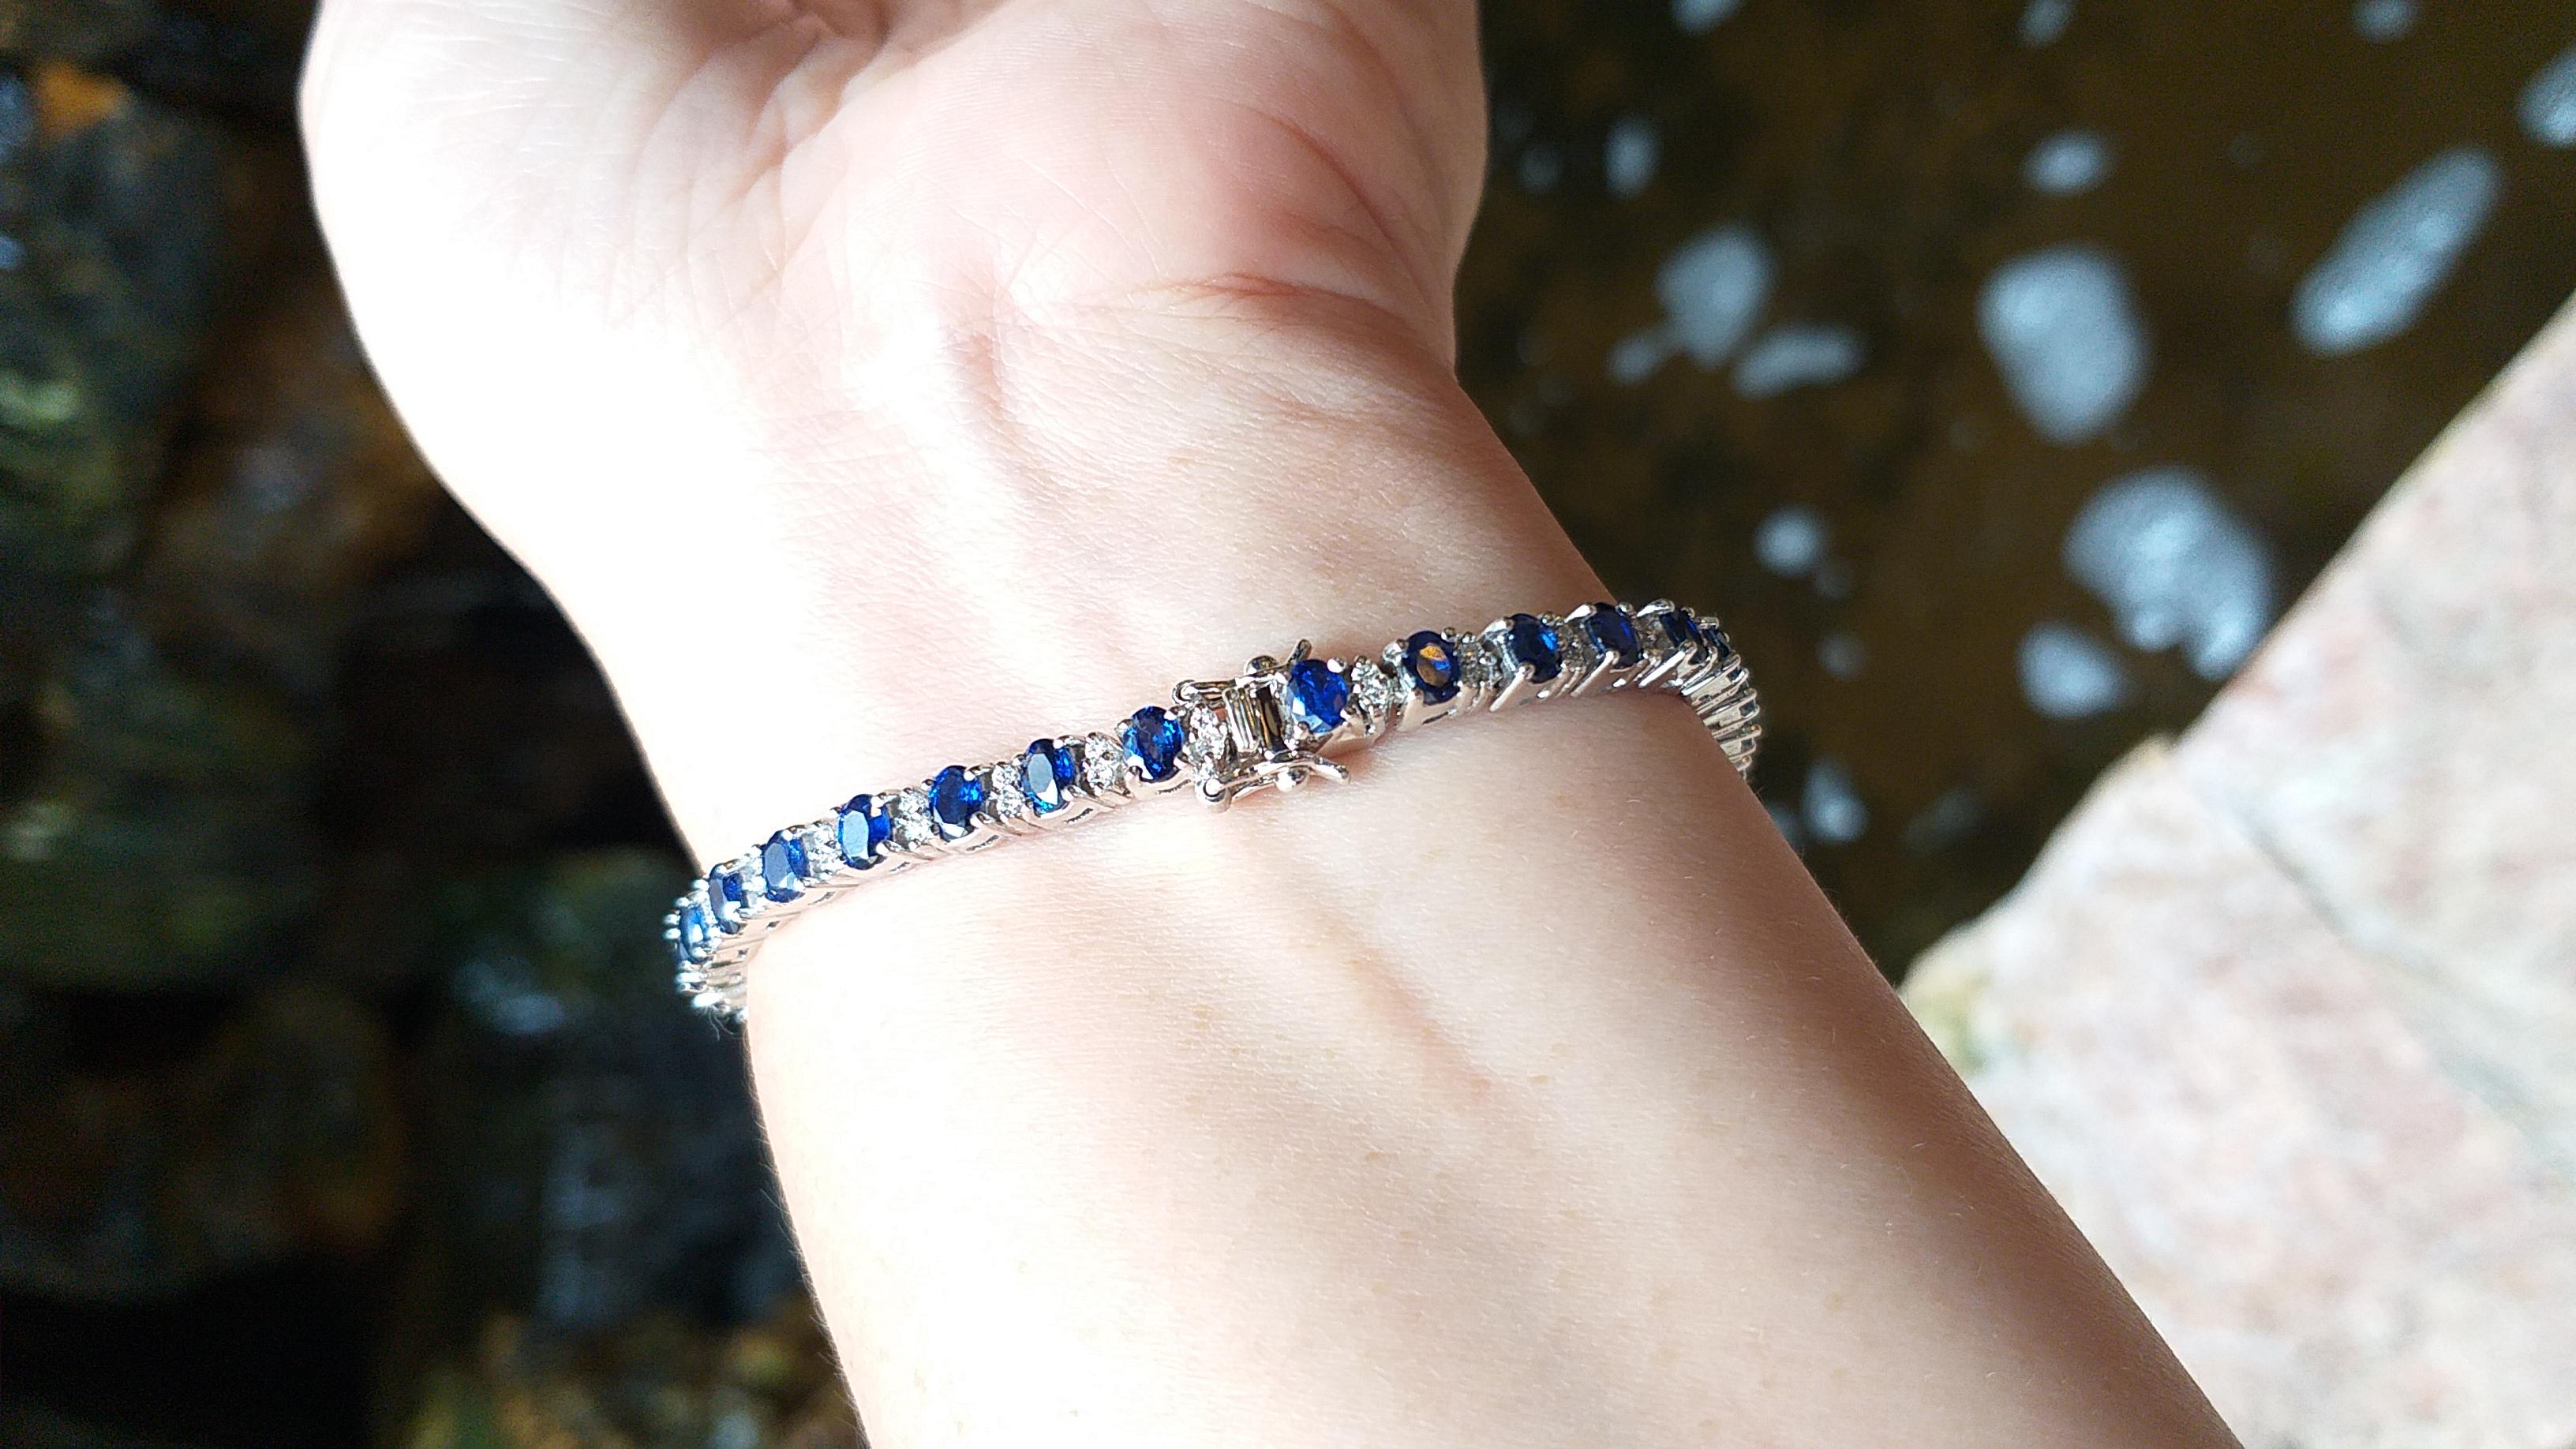 Blue Sapphire 6.33 carats with Diamond 0.64 carat Bracelet set in 18 Karat White Gold Settings

Width:  0.4 cm 
Length: 18.0 cm
Total Weight: 20.25 grams

